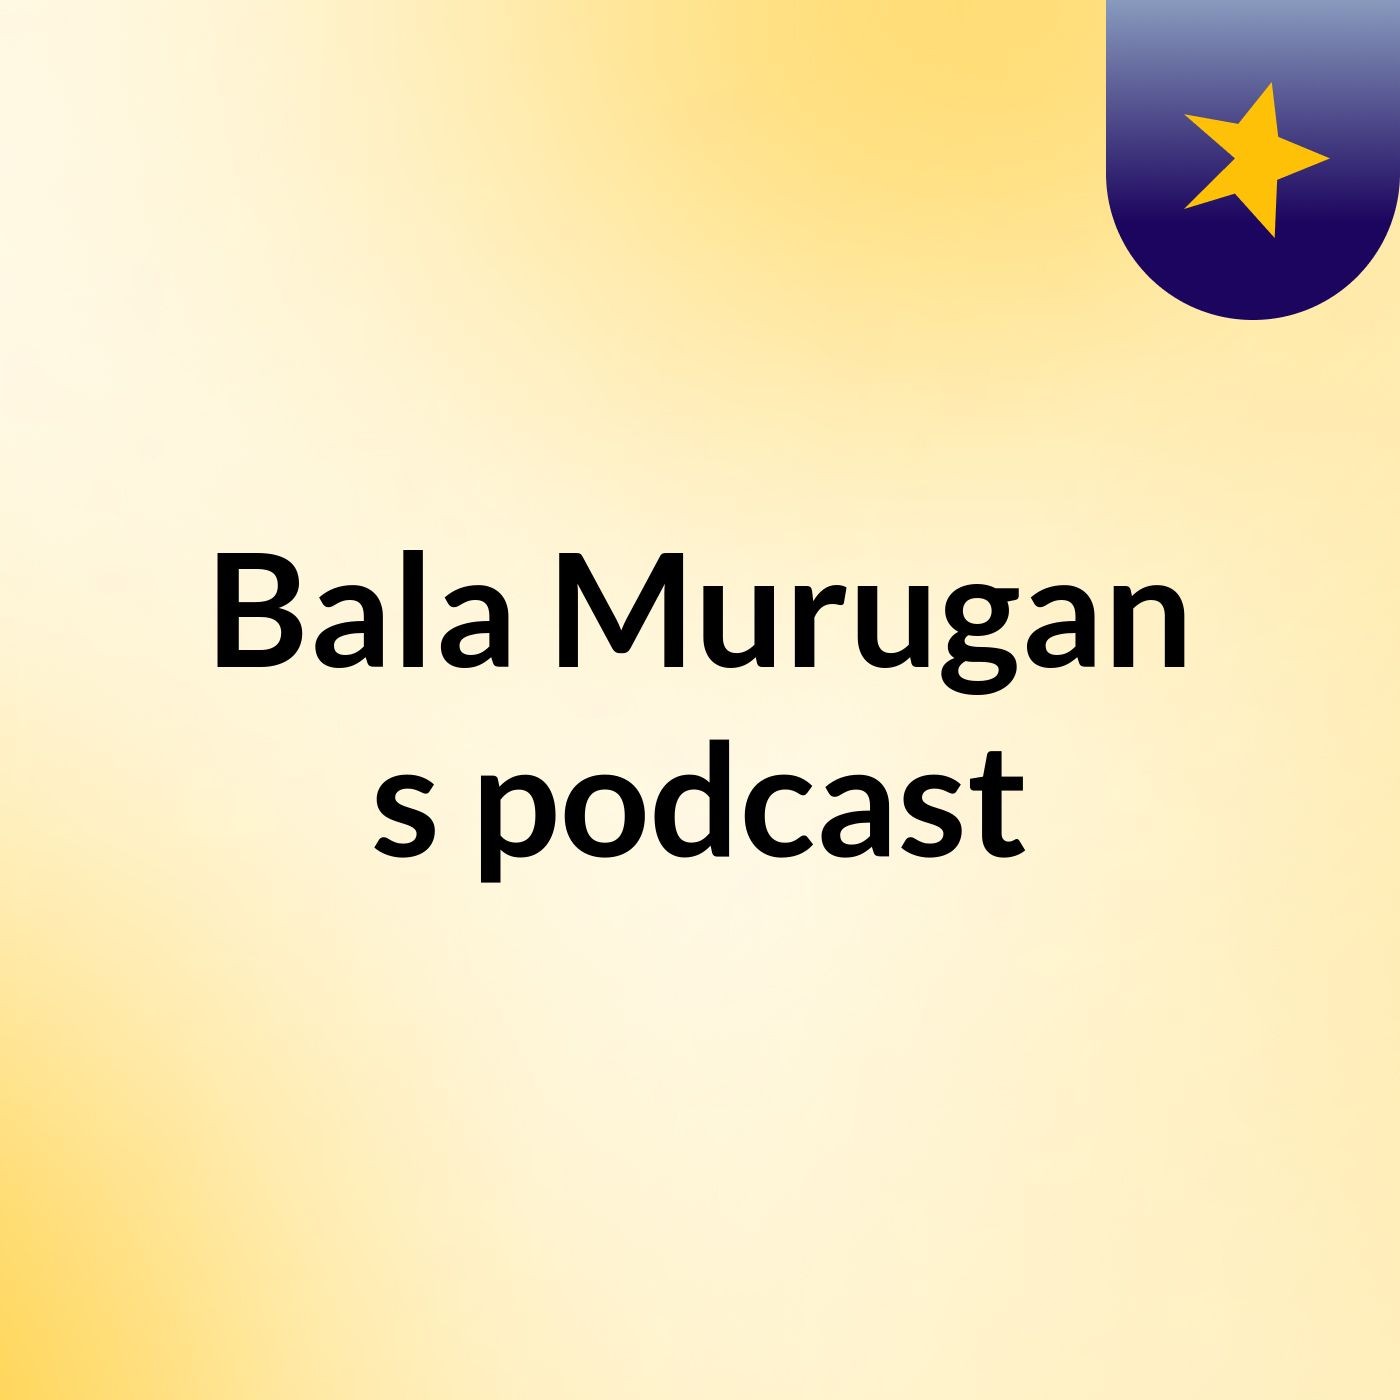 Bala Murugan's podcast